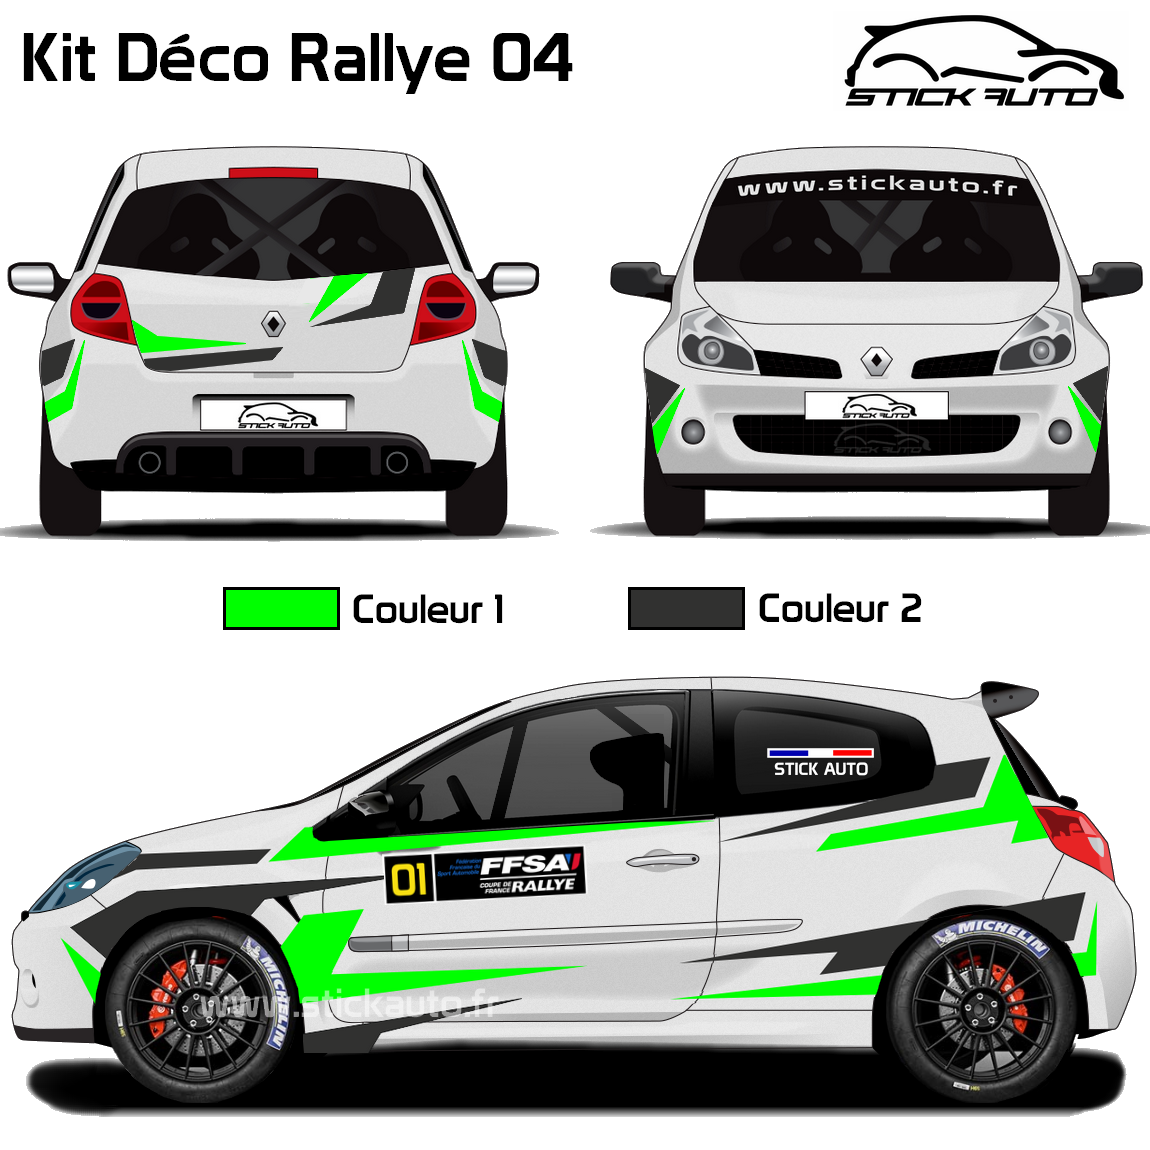 Kit Déco Rallye 04 - STICK AUTO